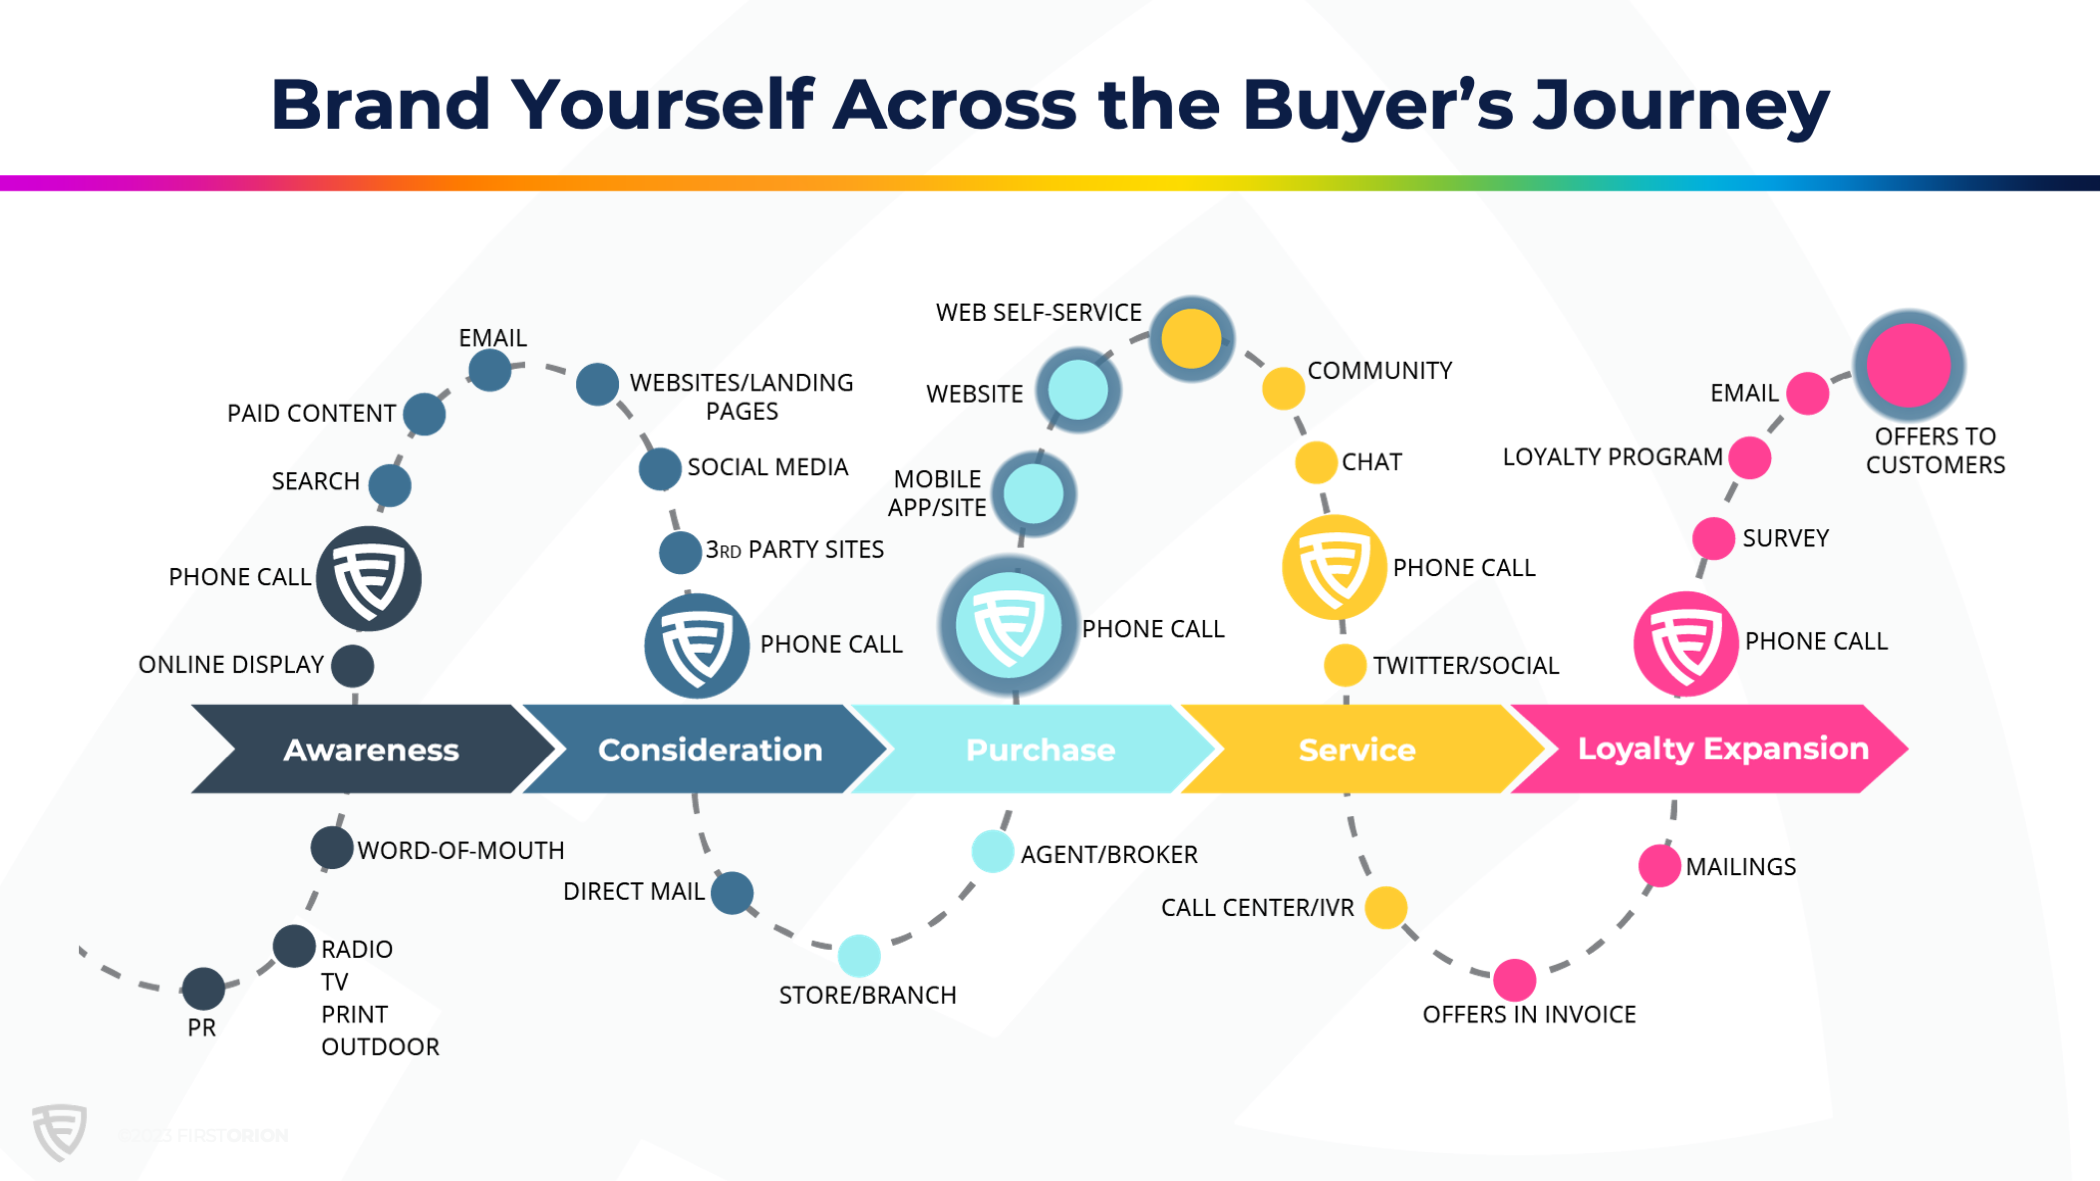 Brand yourself across the buyer's journey